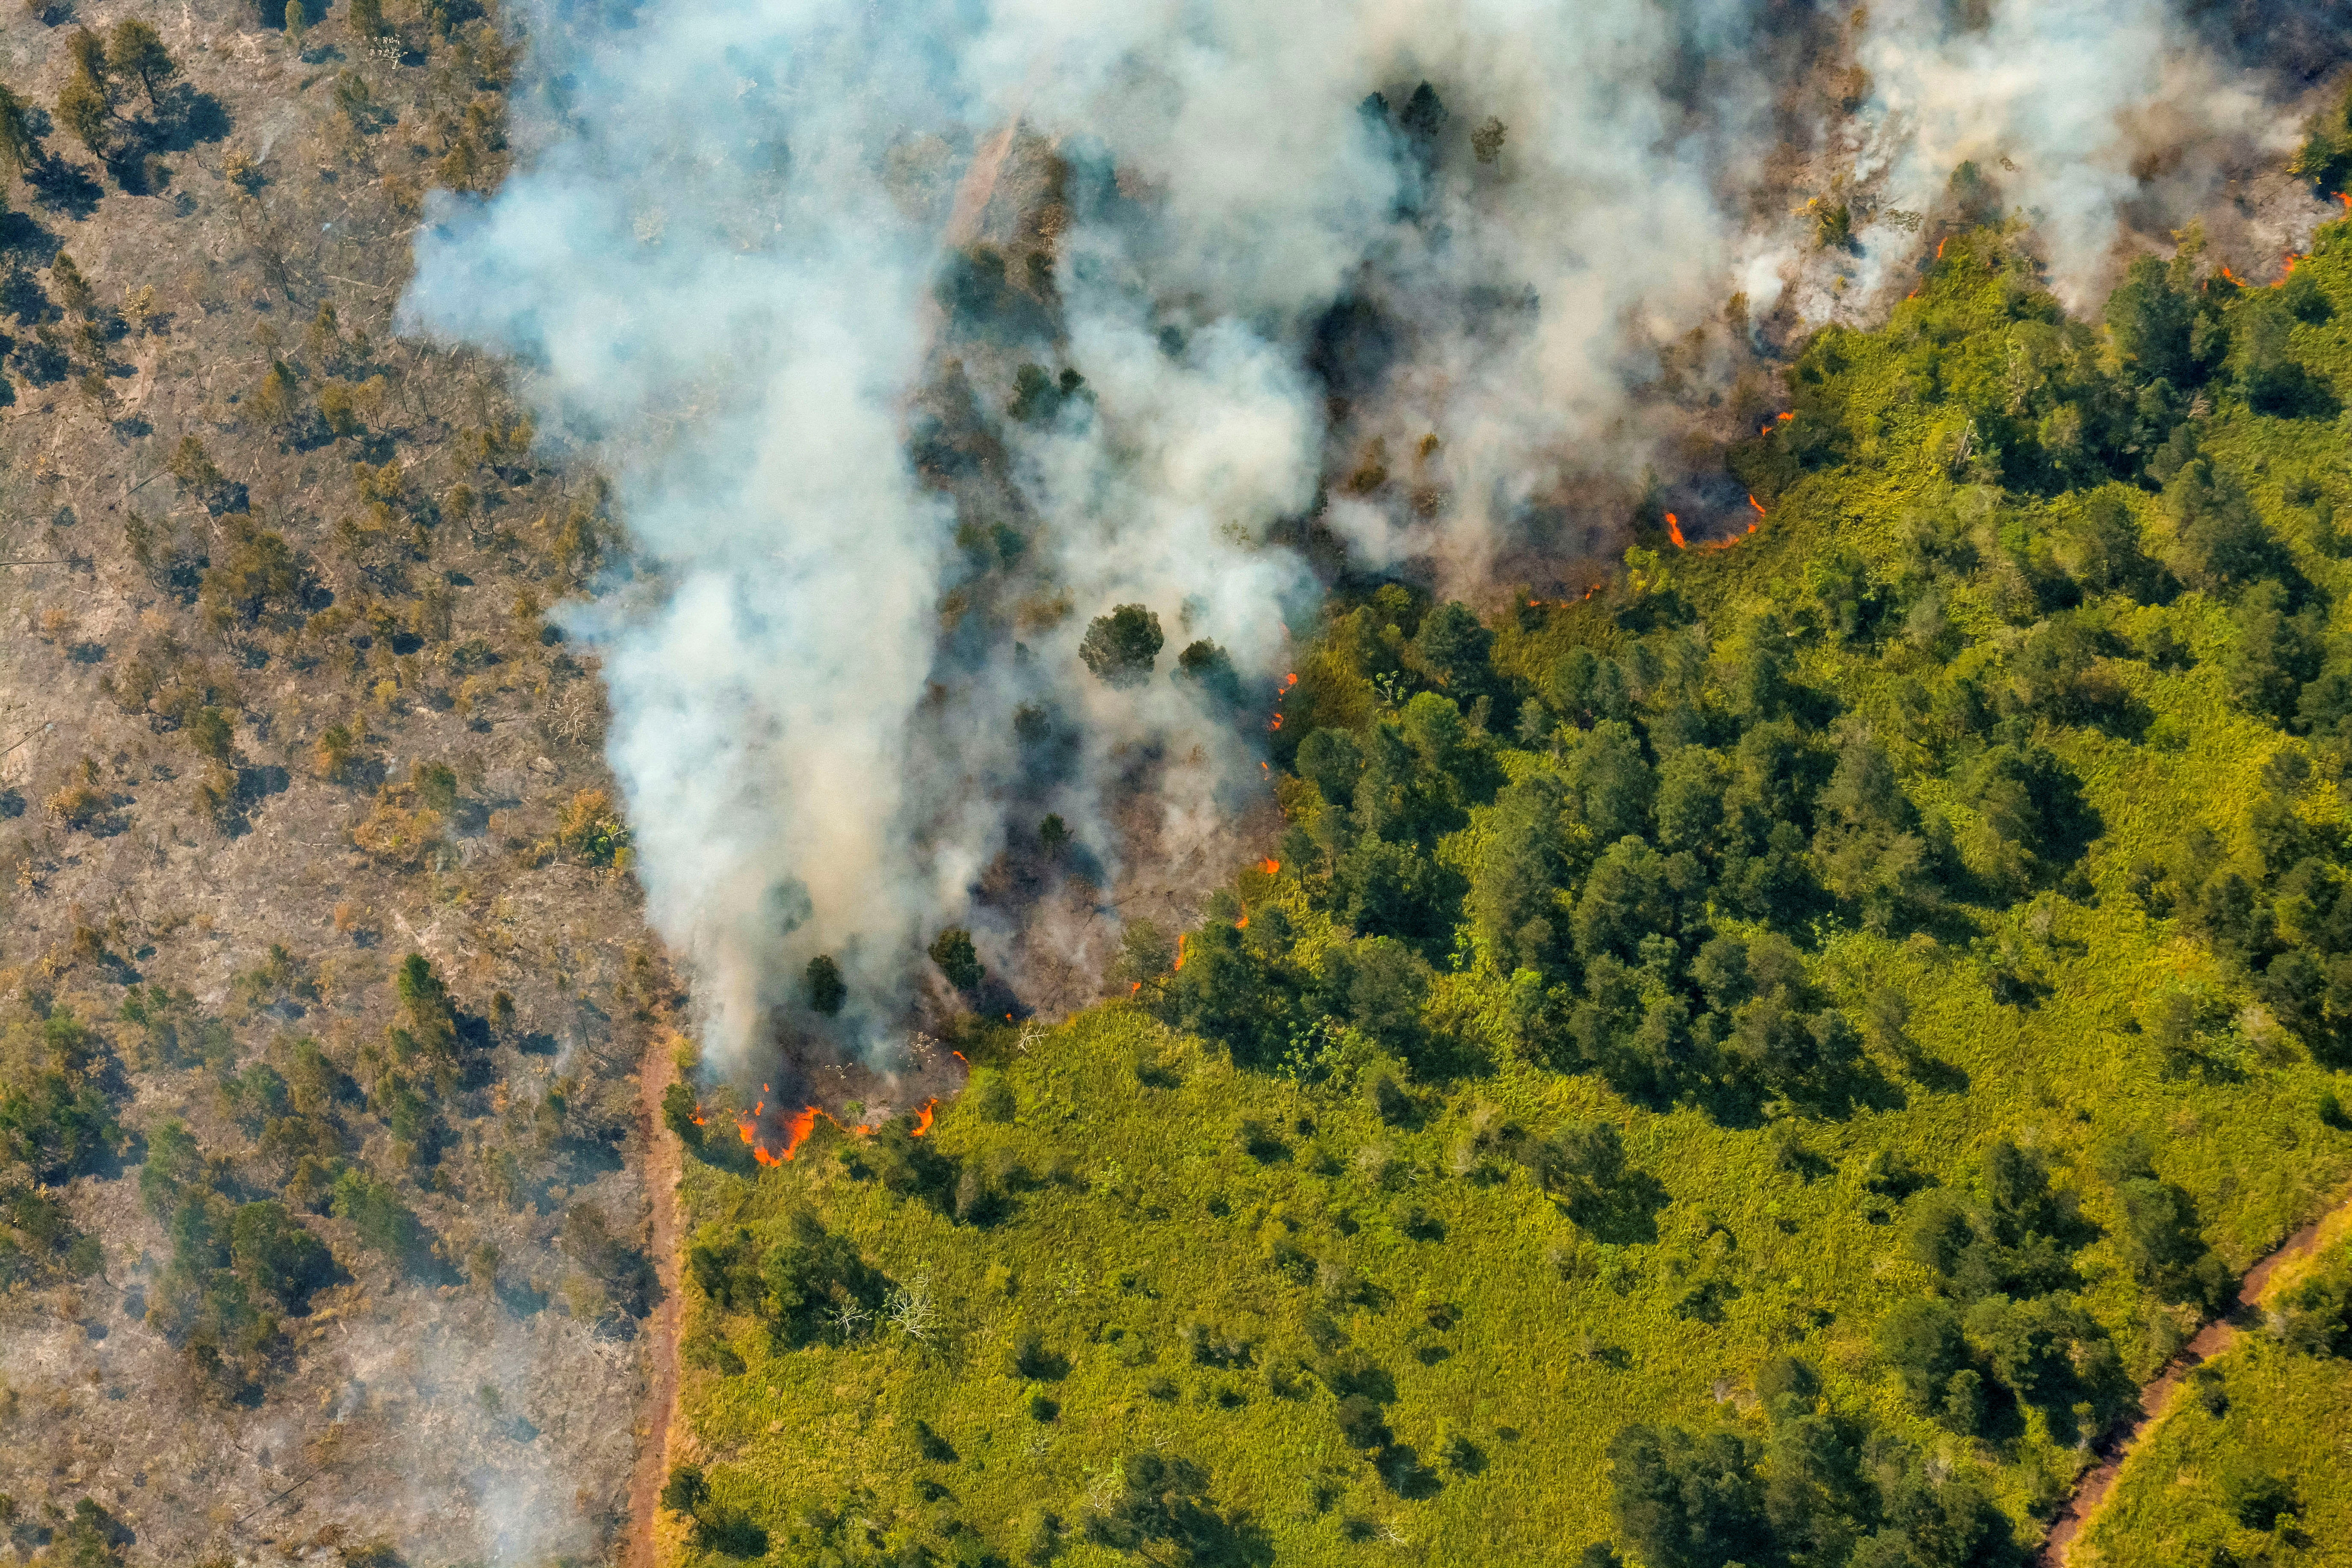 Cuban firefighters battle raging forest fire